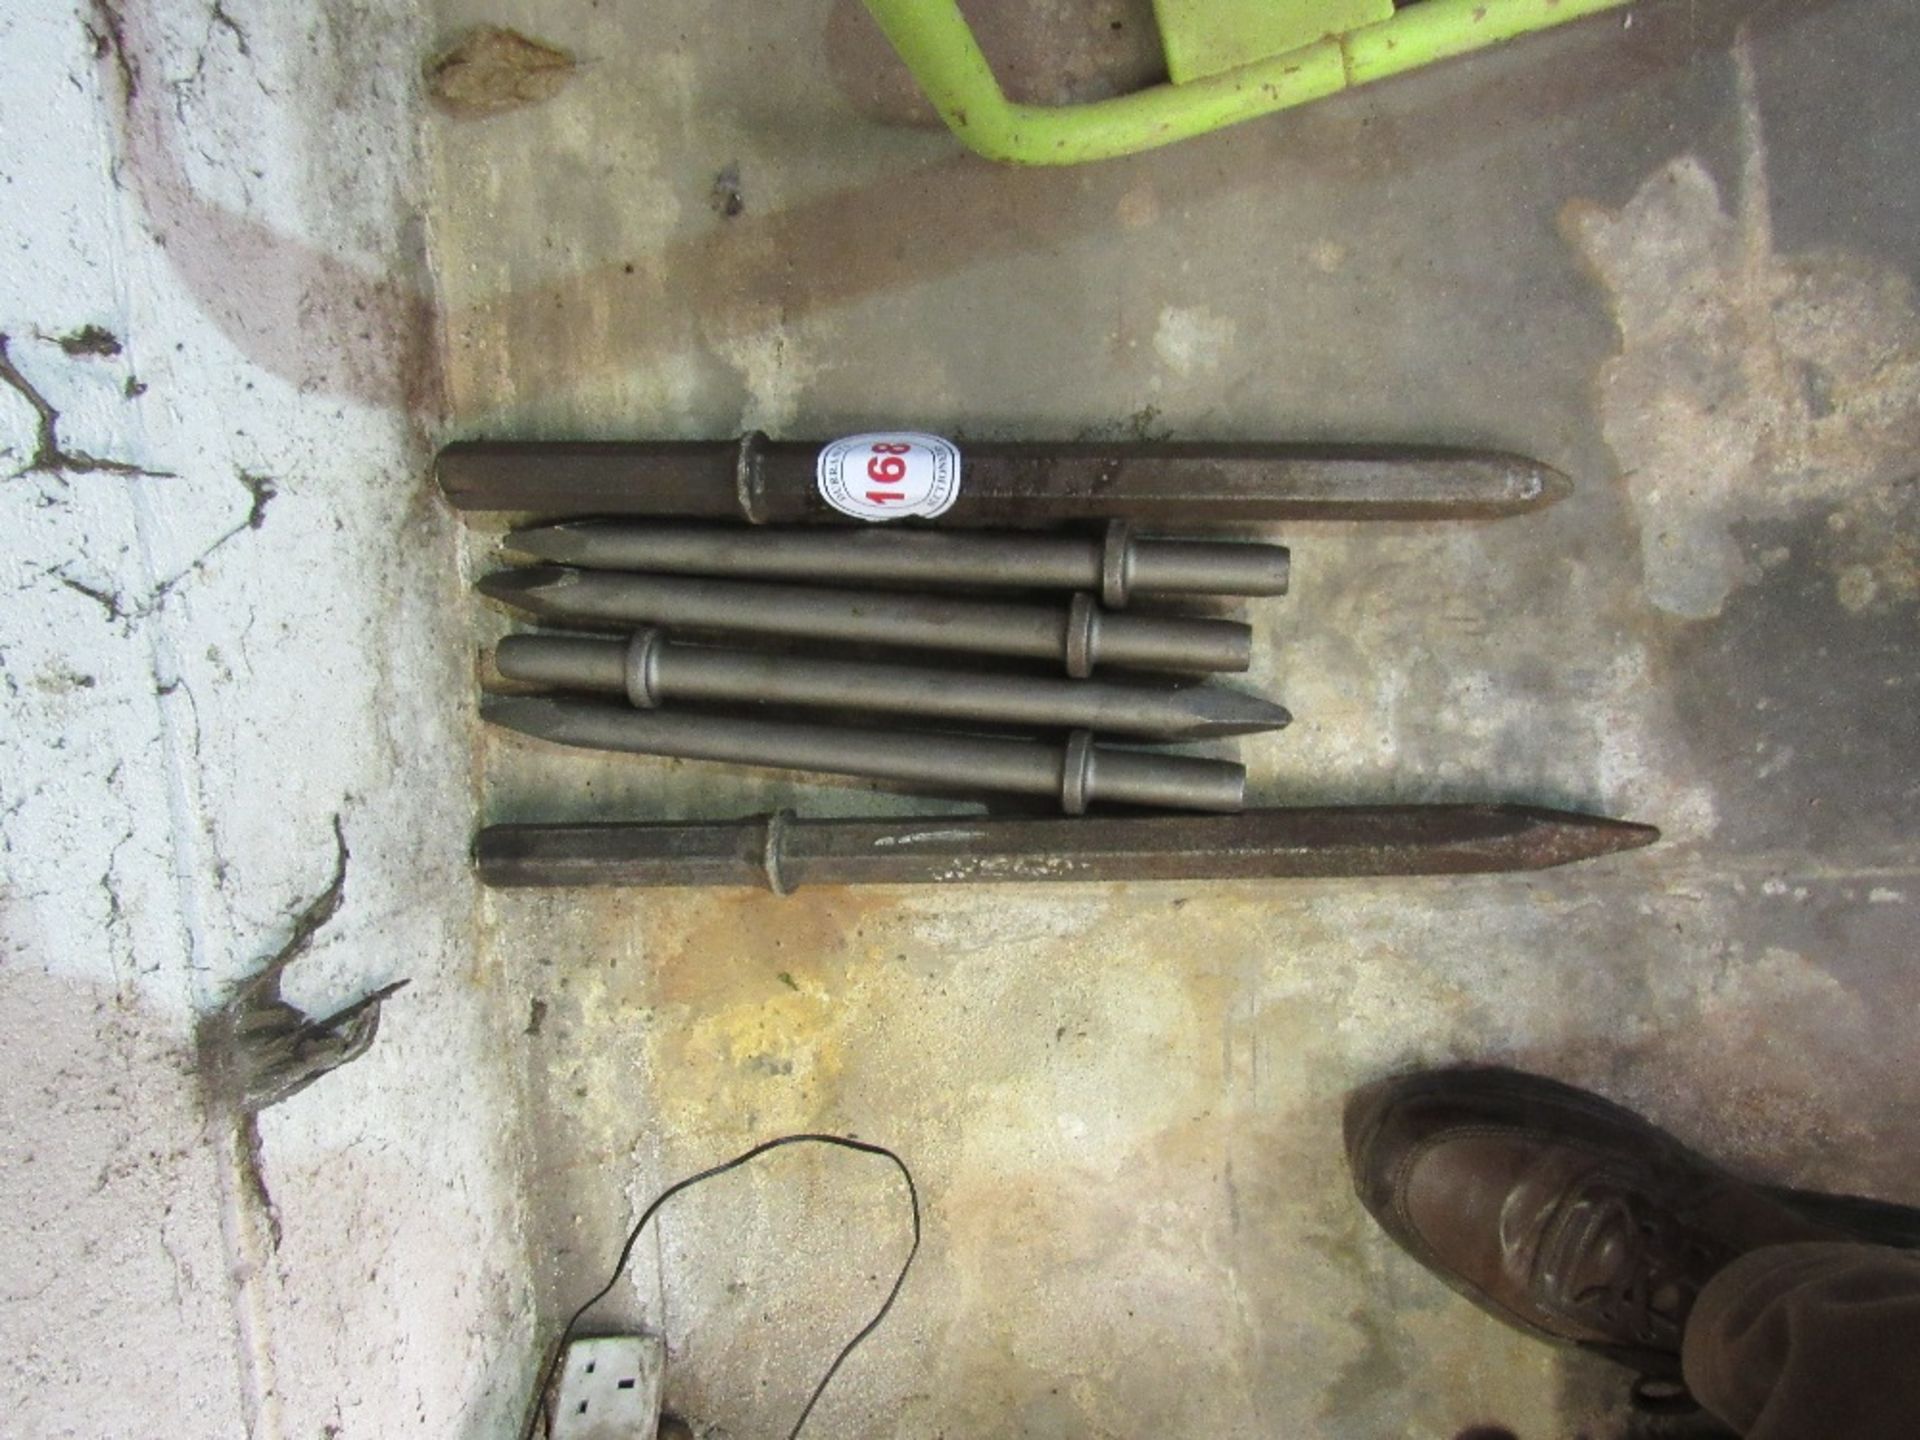 6 x Kango hammer attachments